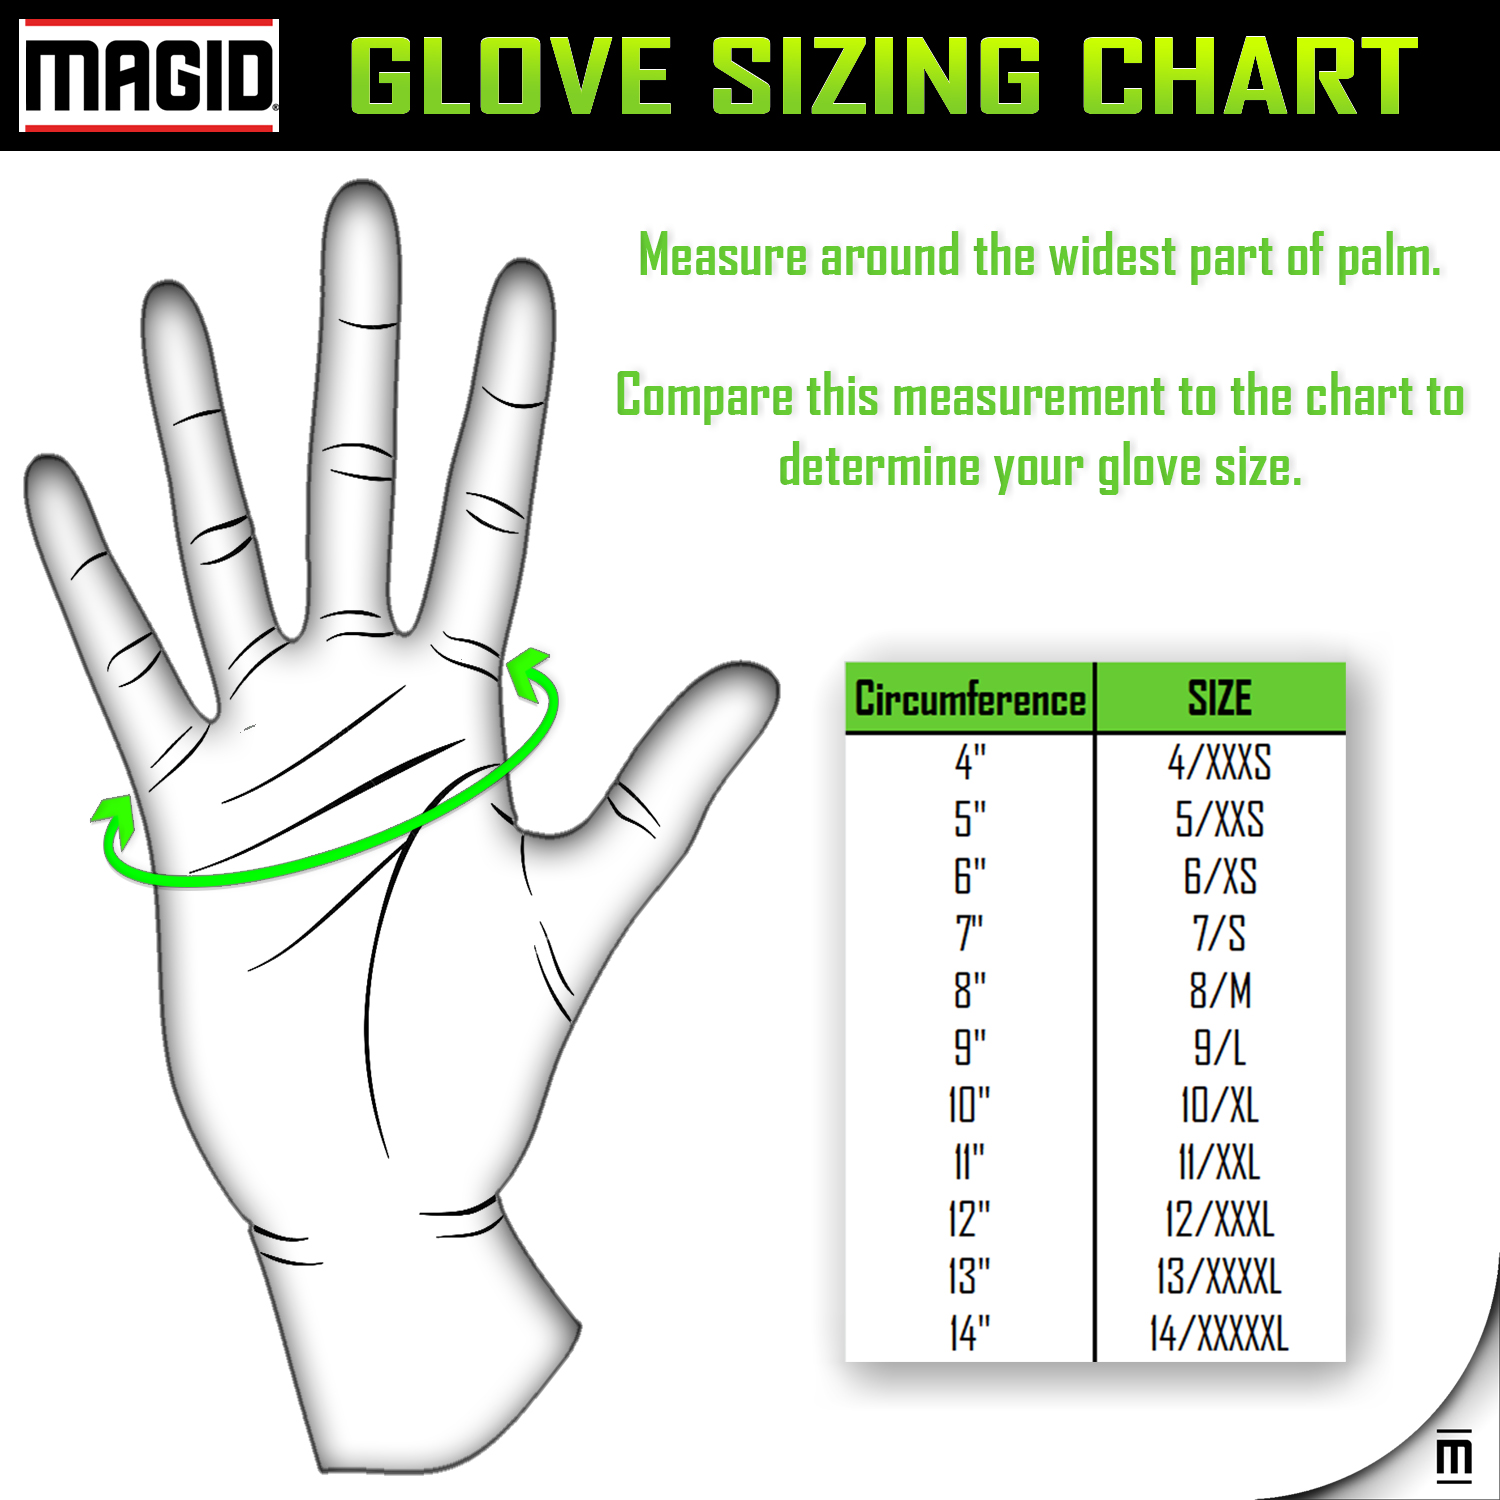 Glove Cut Level Chart